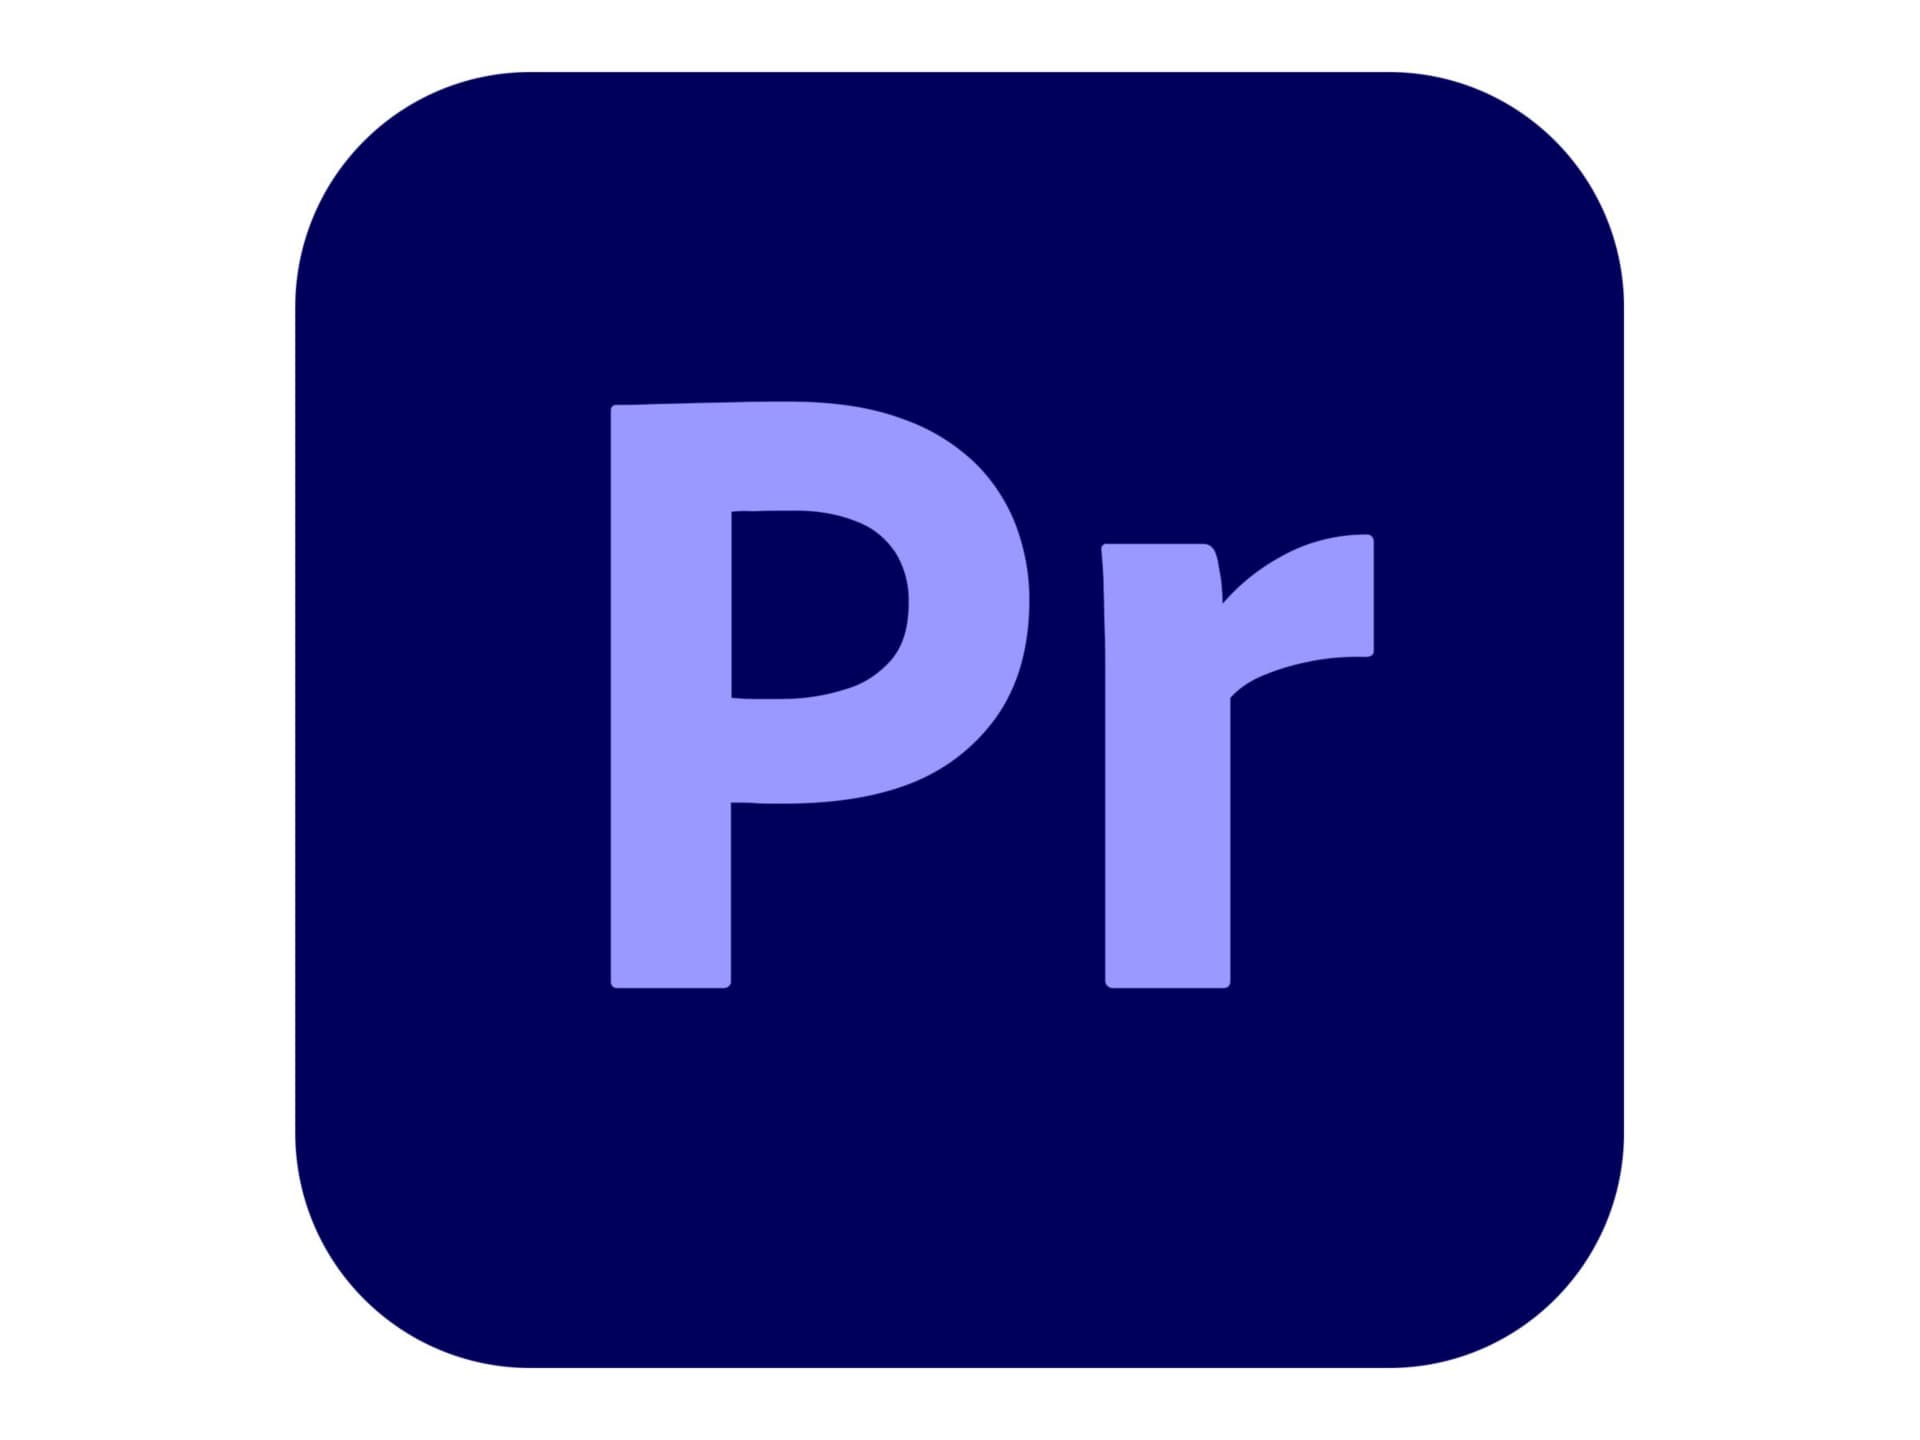 Adobe Premiere Pro CC for Enterprise - Subscription New (9 months) - 1 named user